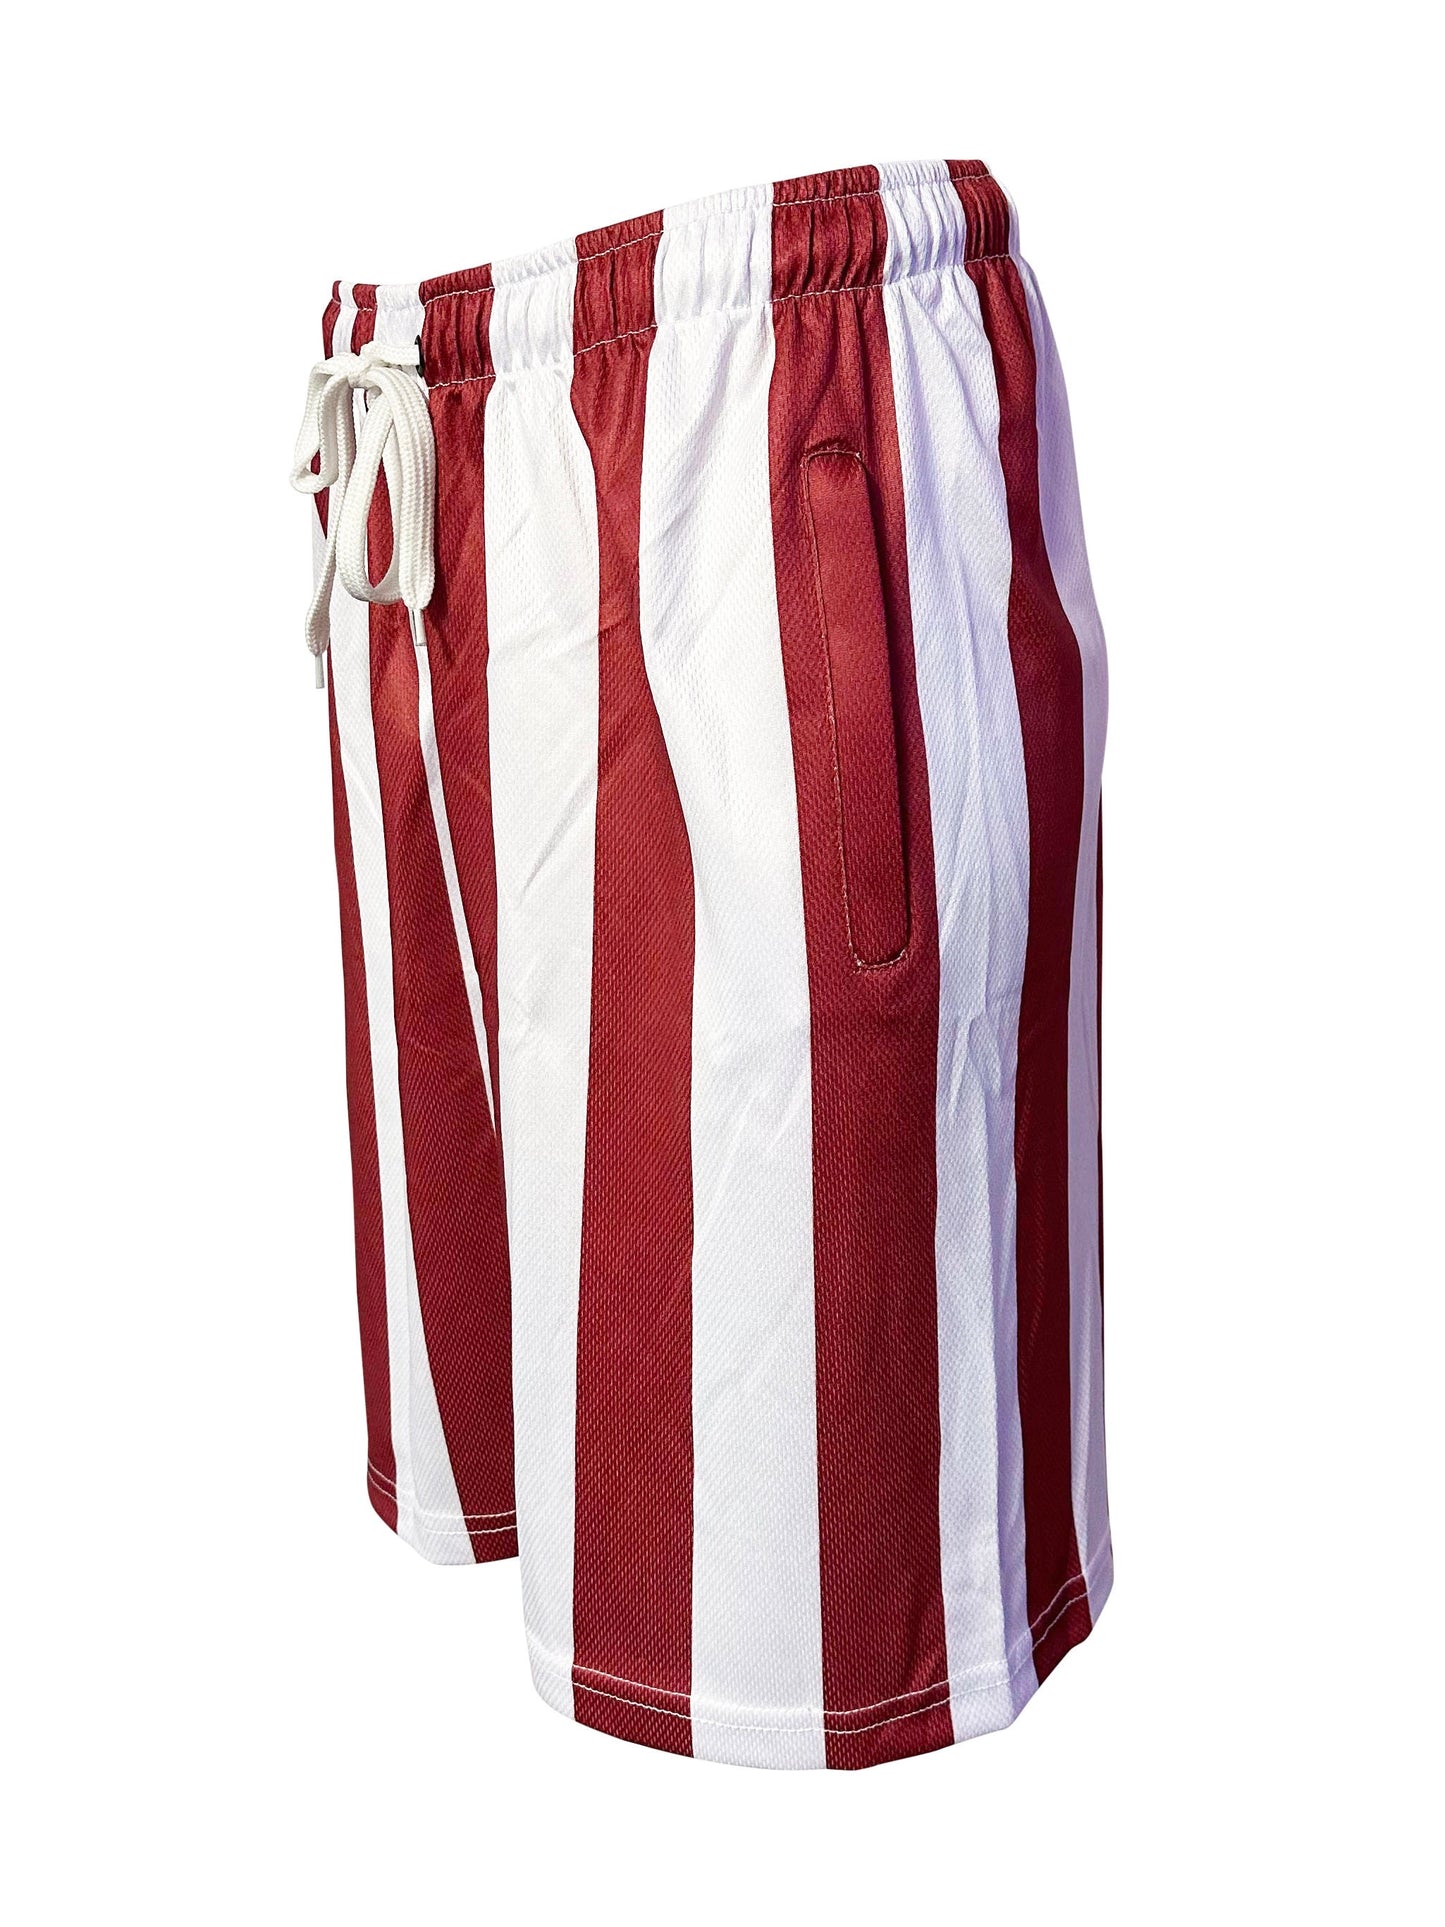 Candy Cane Striped Men's Mesh Shorts